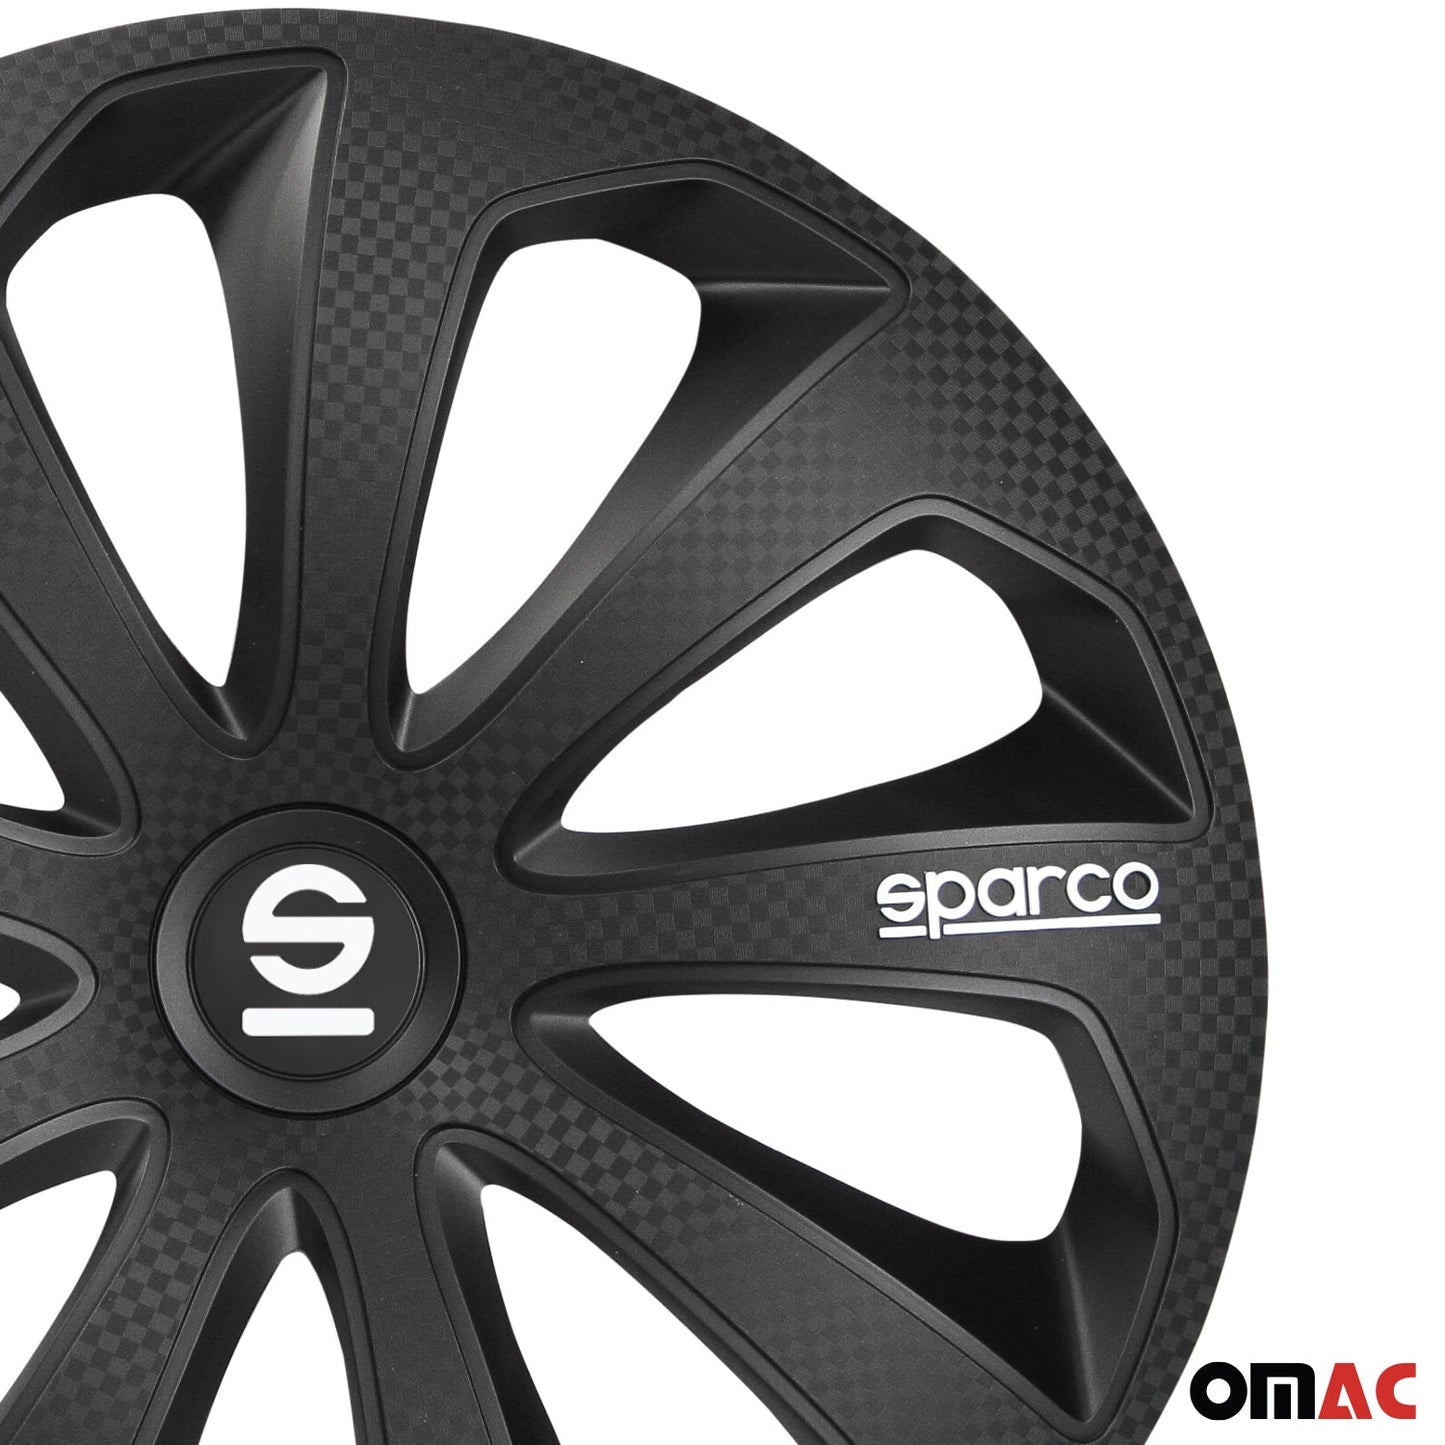 OMAC 16" Sparco Sicilia Wheel Covers Hubcaps Black 4 Pcs 96SPC1674BKC